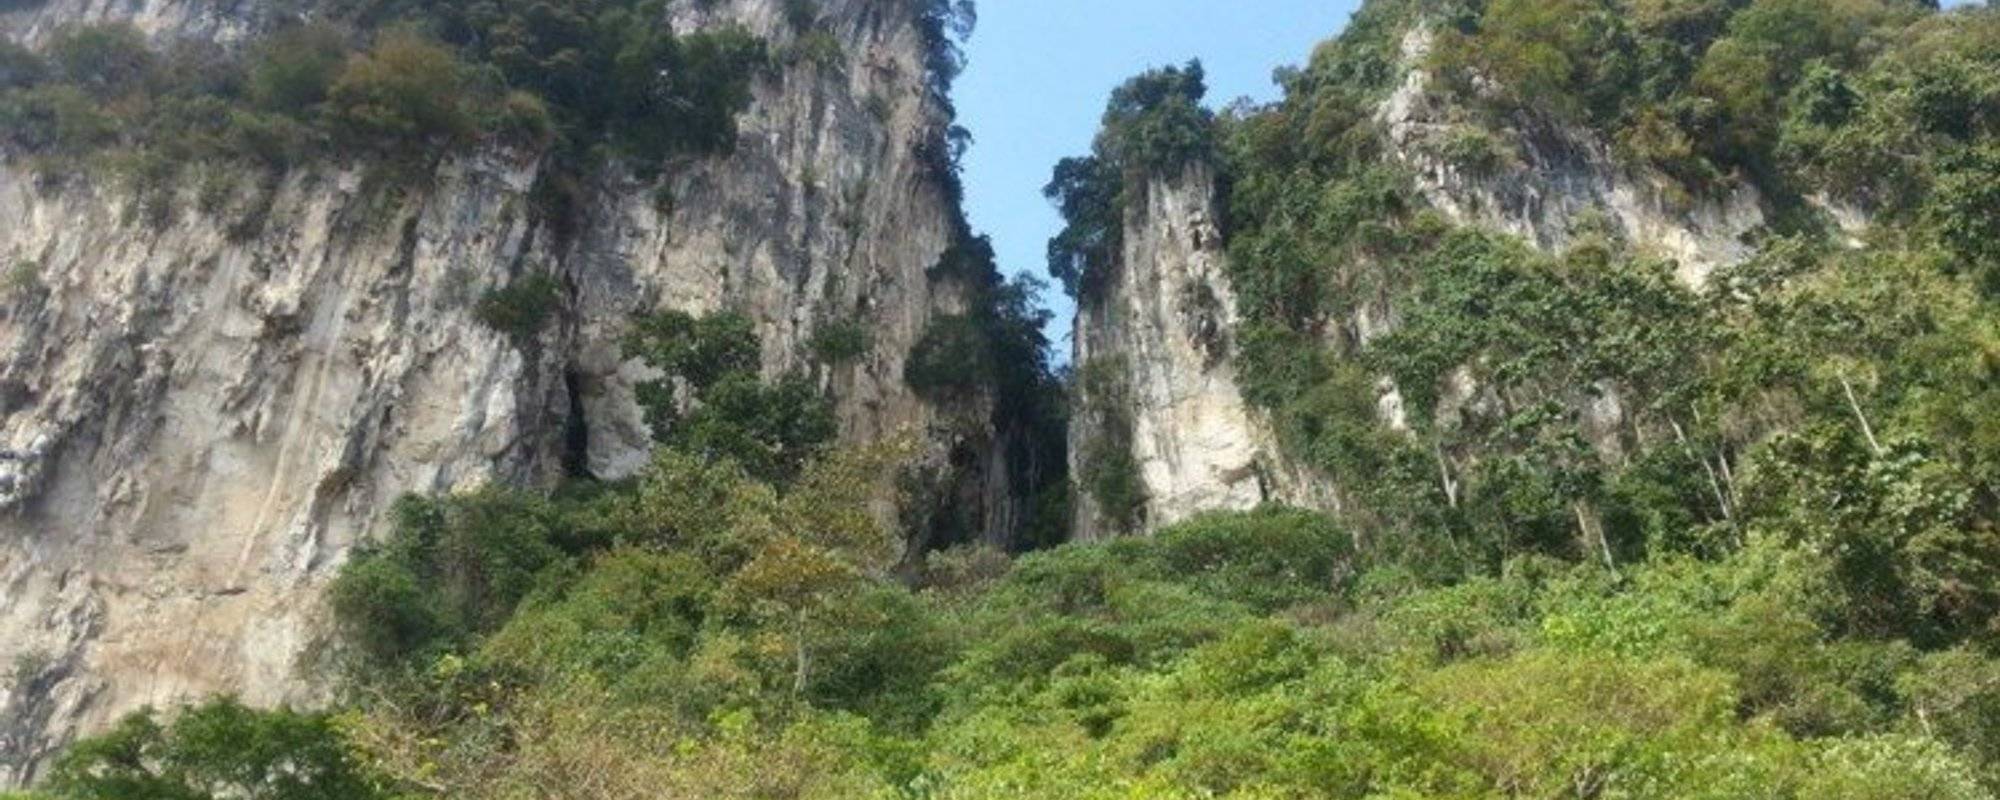 [Trip to Malaysia] Amazing Batu Caves
